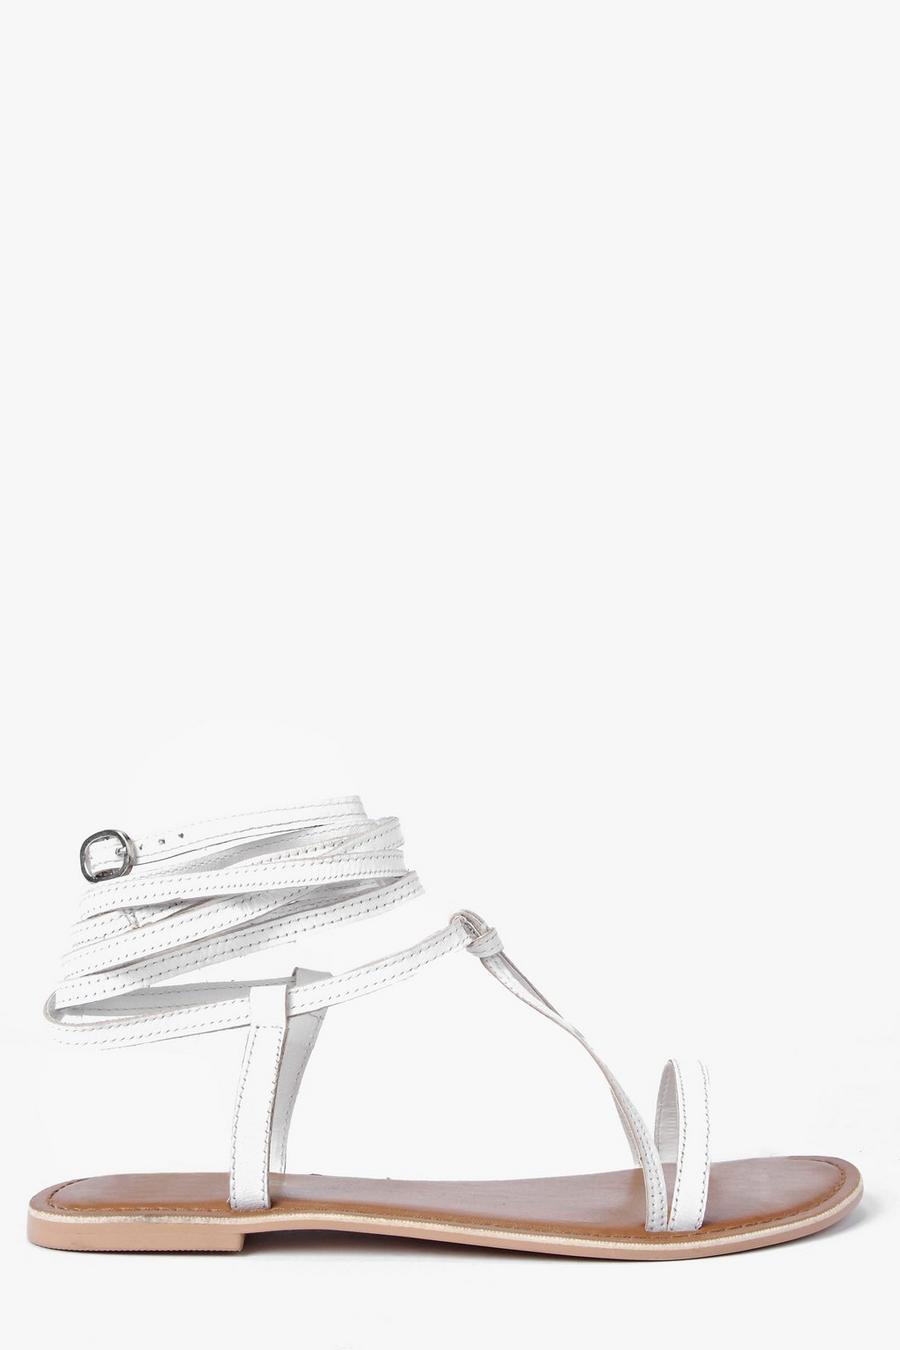 Boutique sandali ghillie in pelle con fascette incrociate, Bianco image number 1